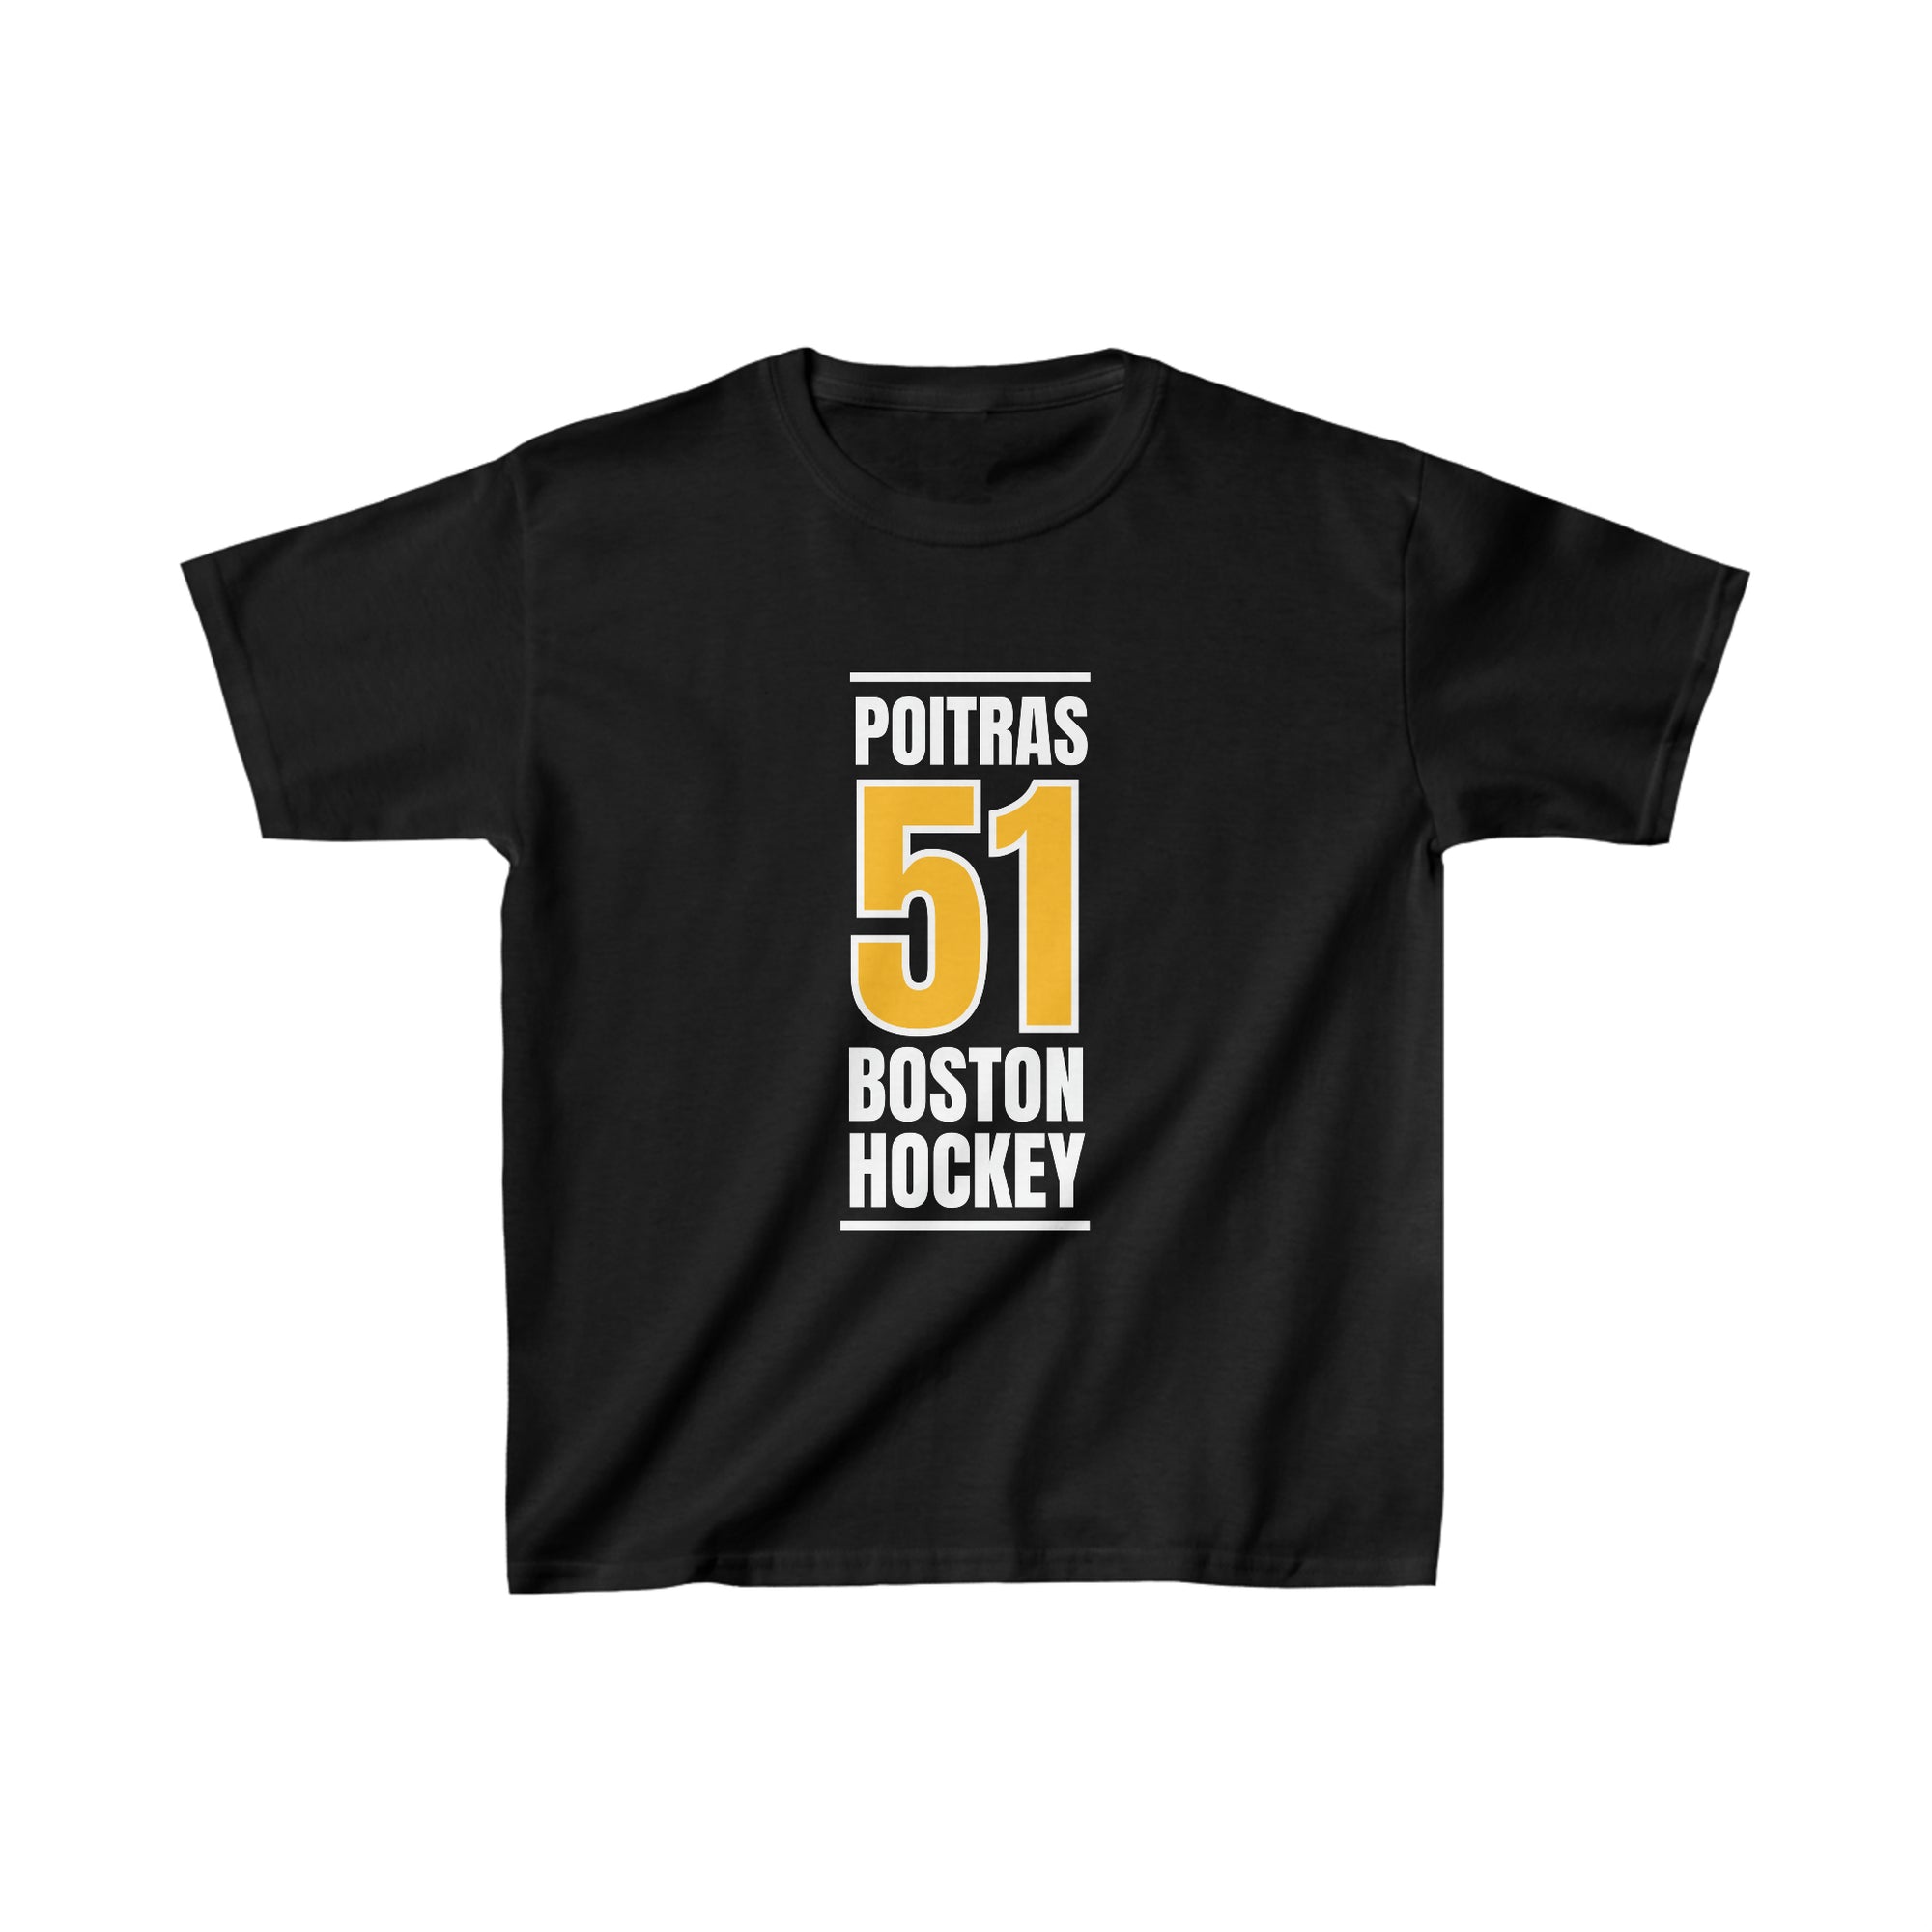 Poitras 51 Boston Hockey Gold Vertical Design Kids Tee